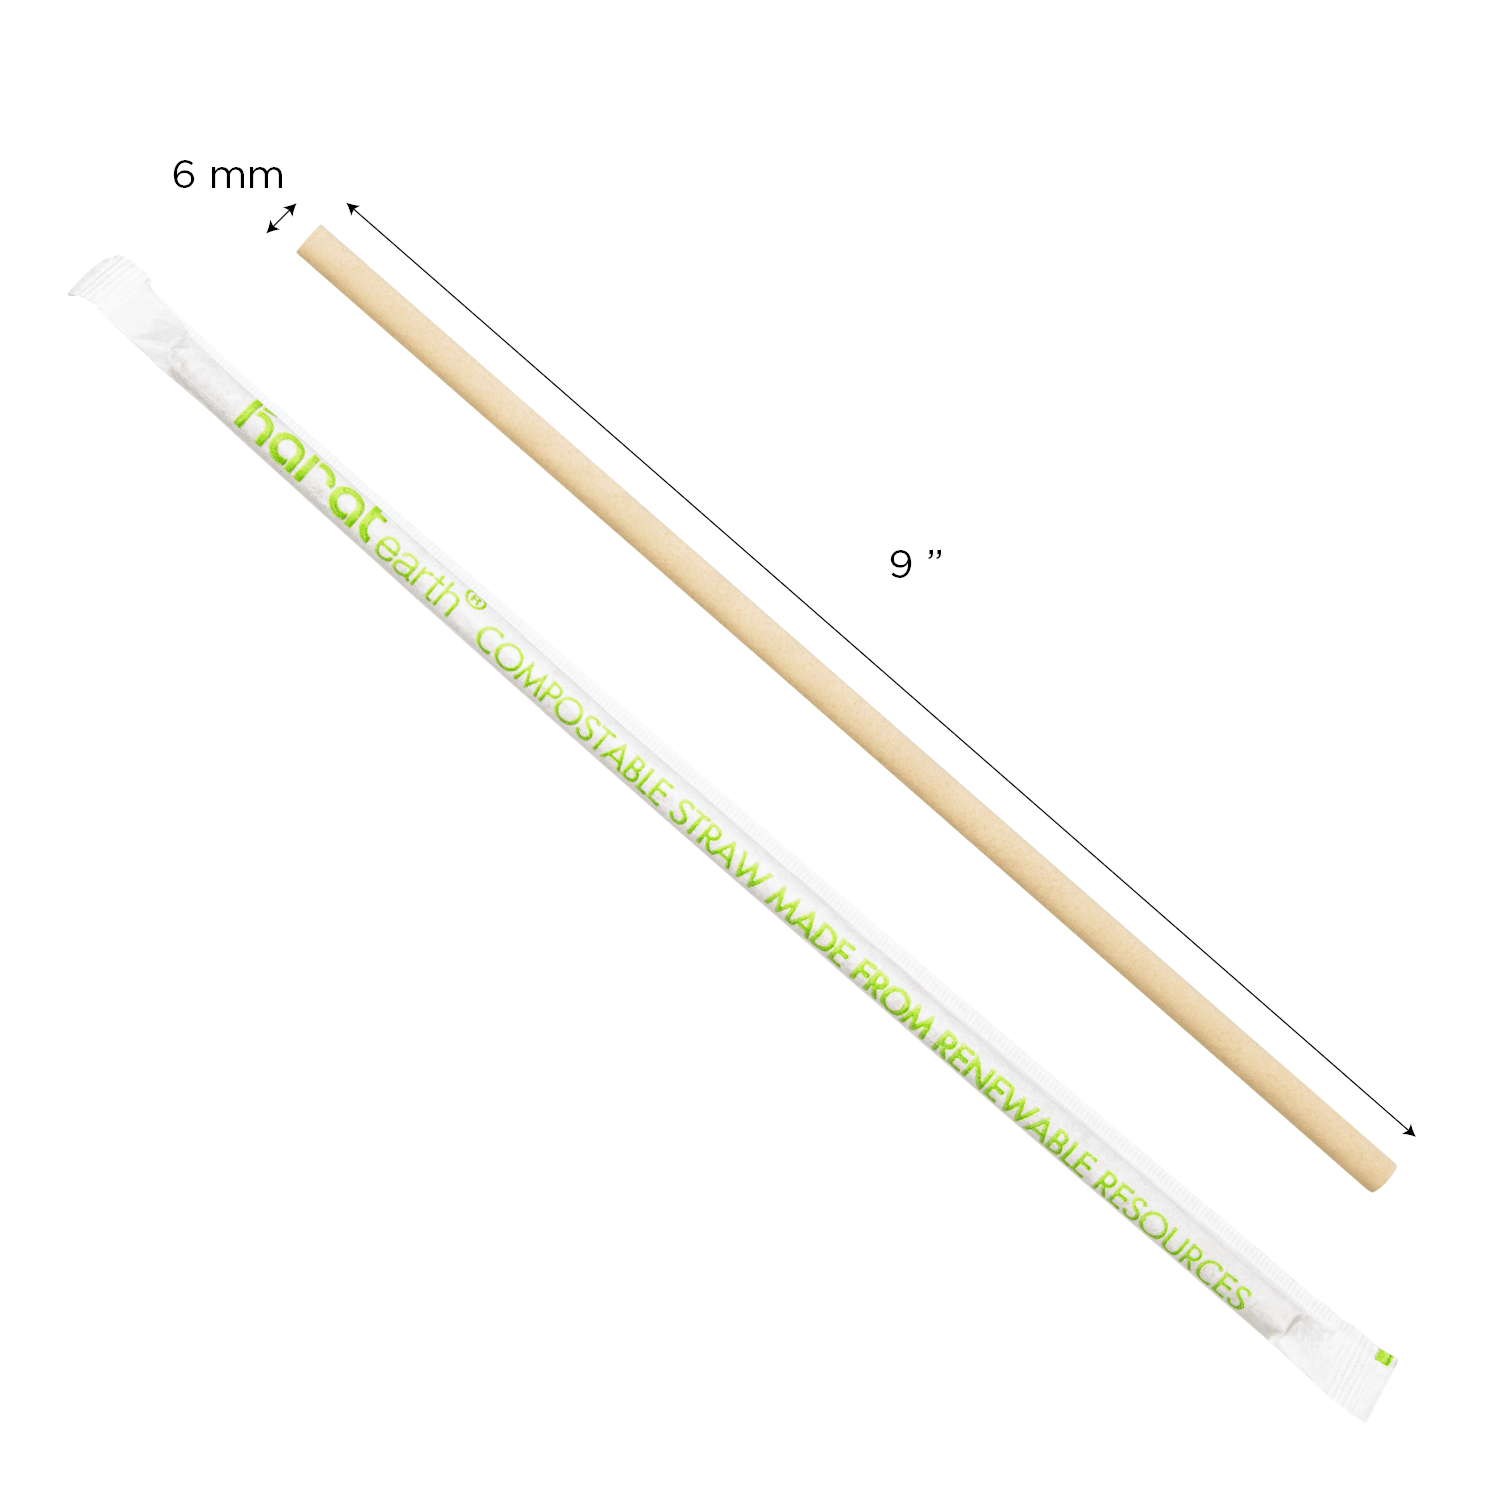 Karat Earth Flat Cut Bamboo Fiber Jumbo 9” Straw measurements